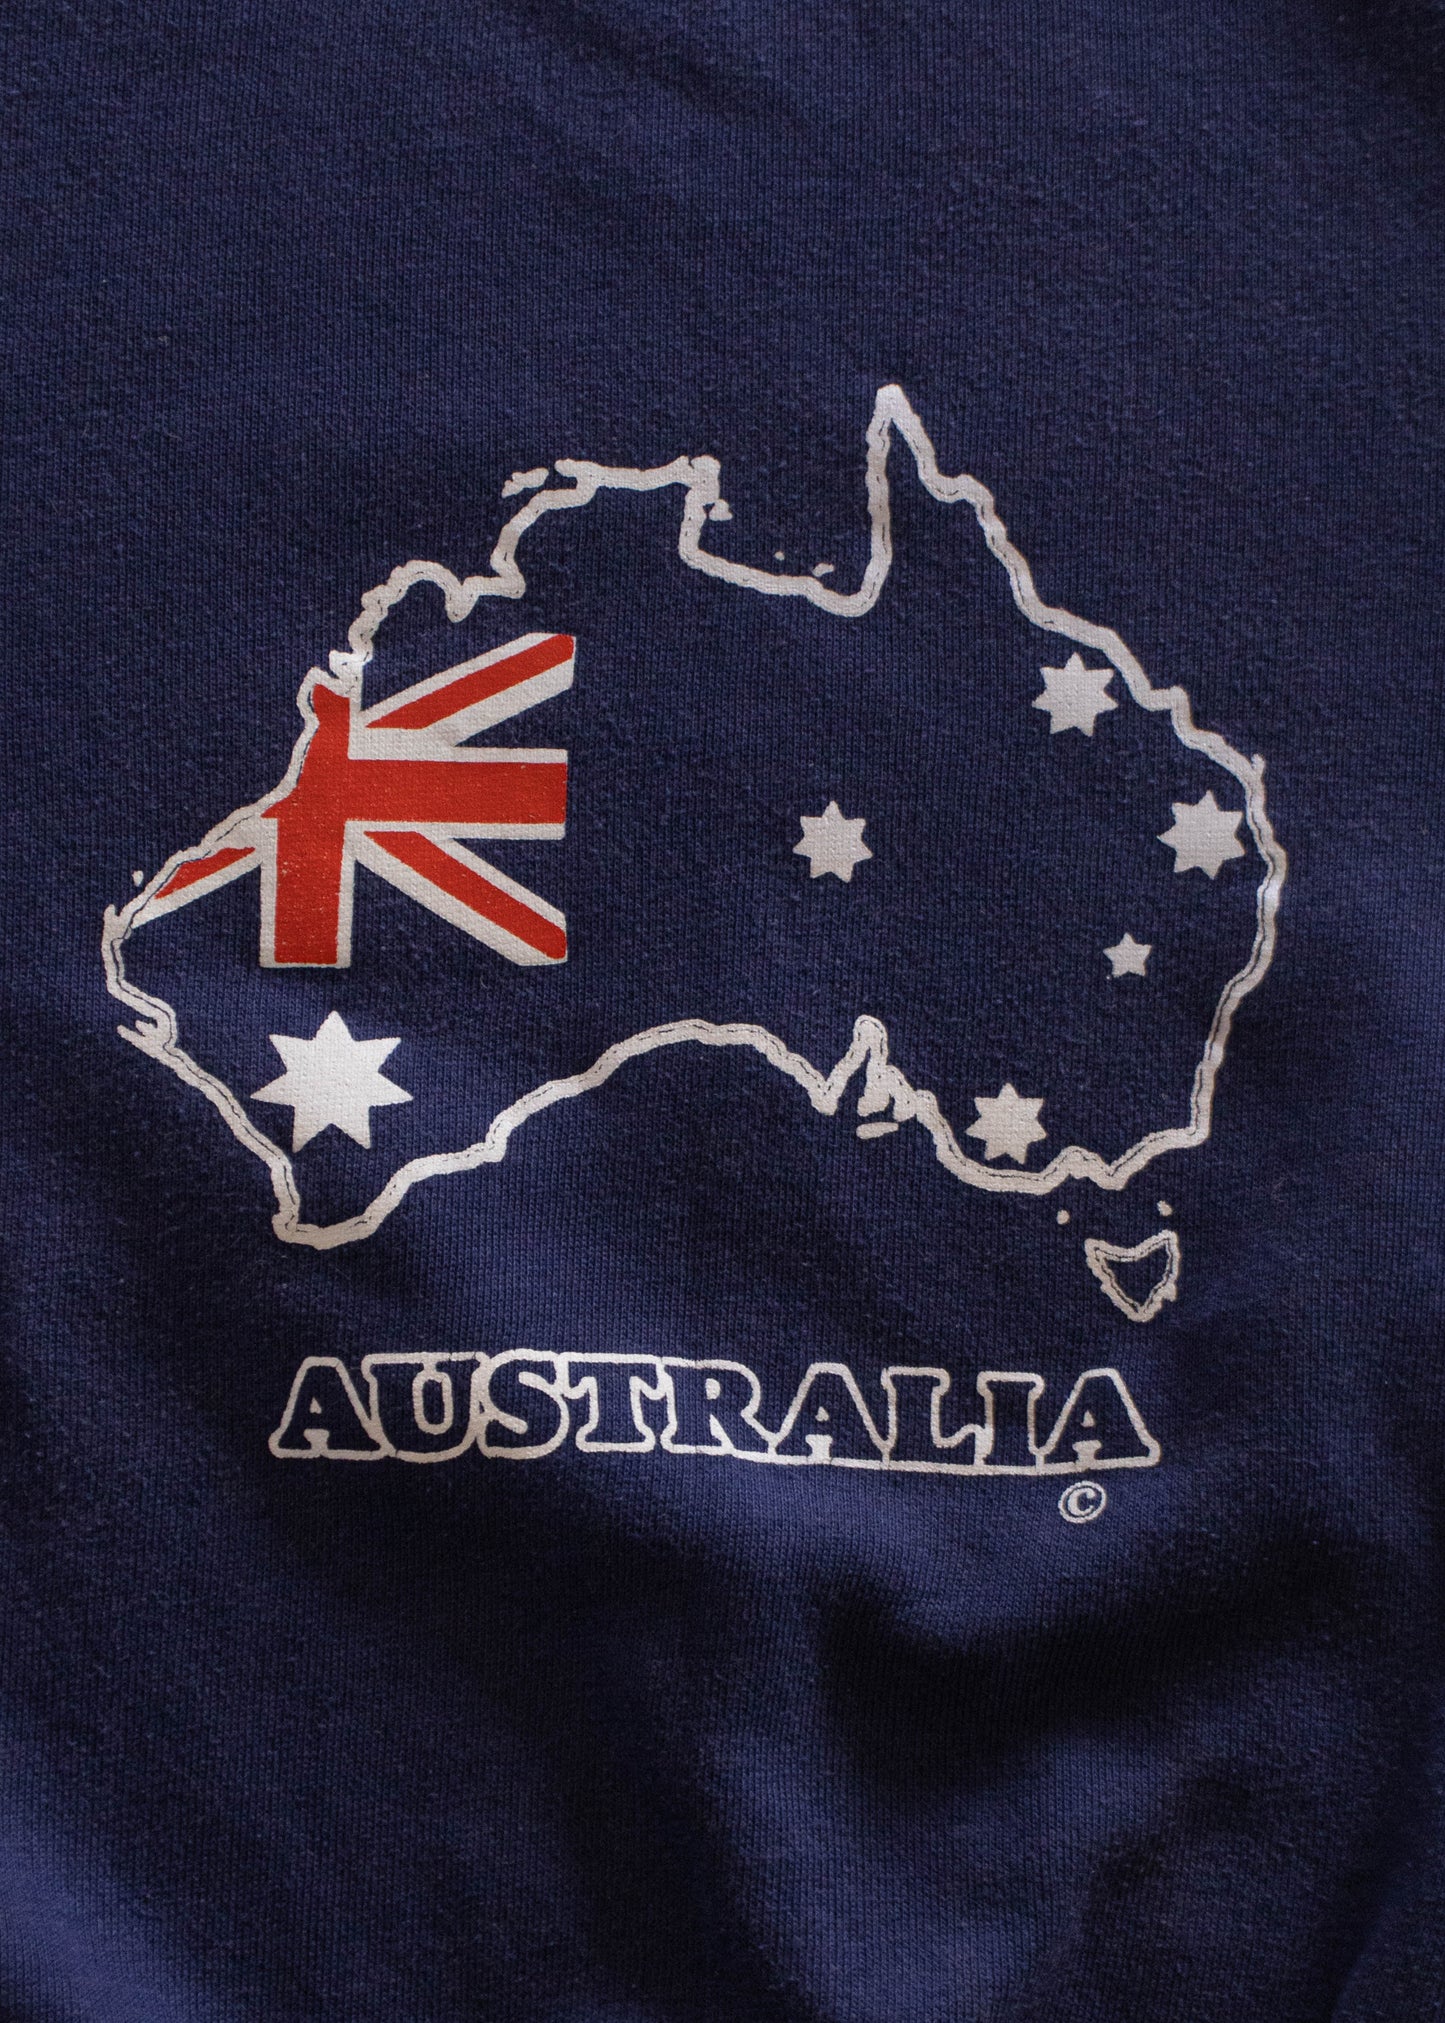 1980s Ryder Australia Souvenir Raglan Sweatshirt Size S/M